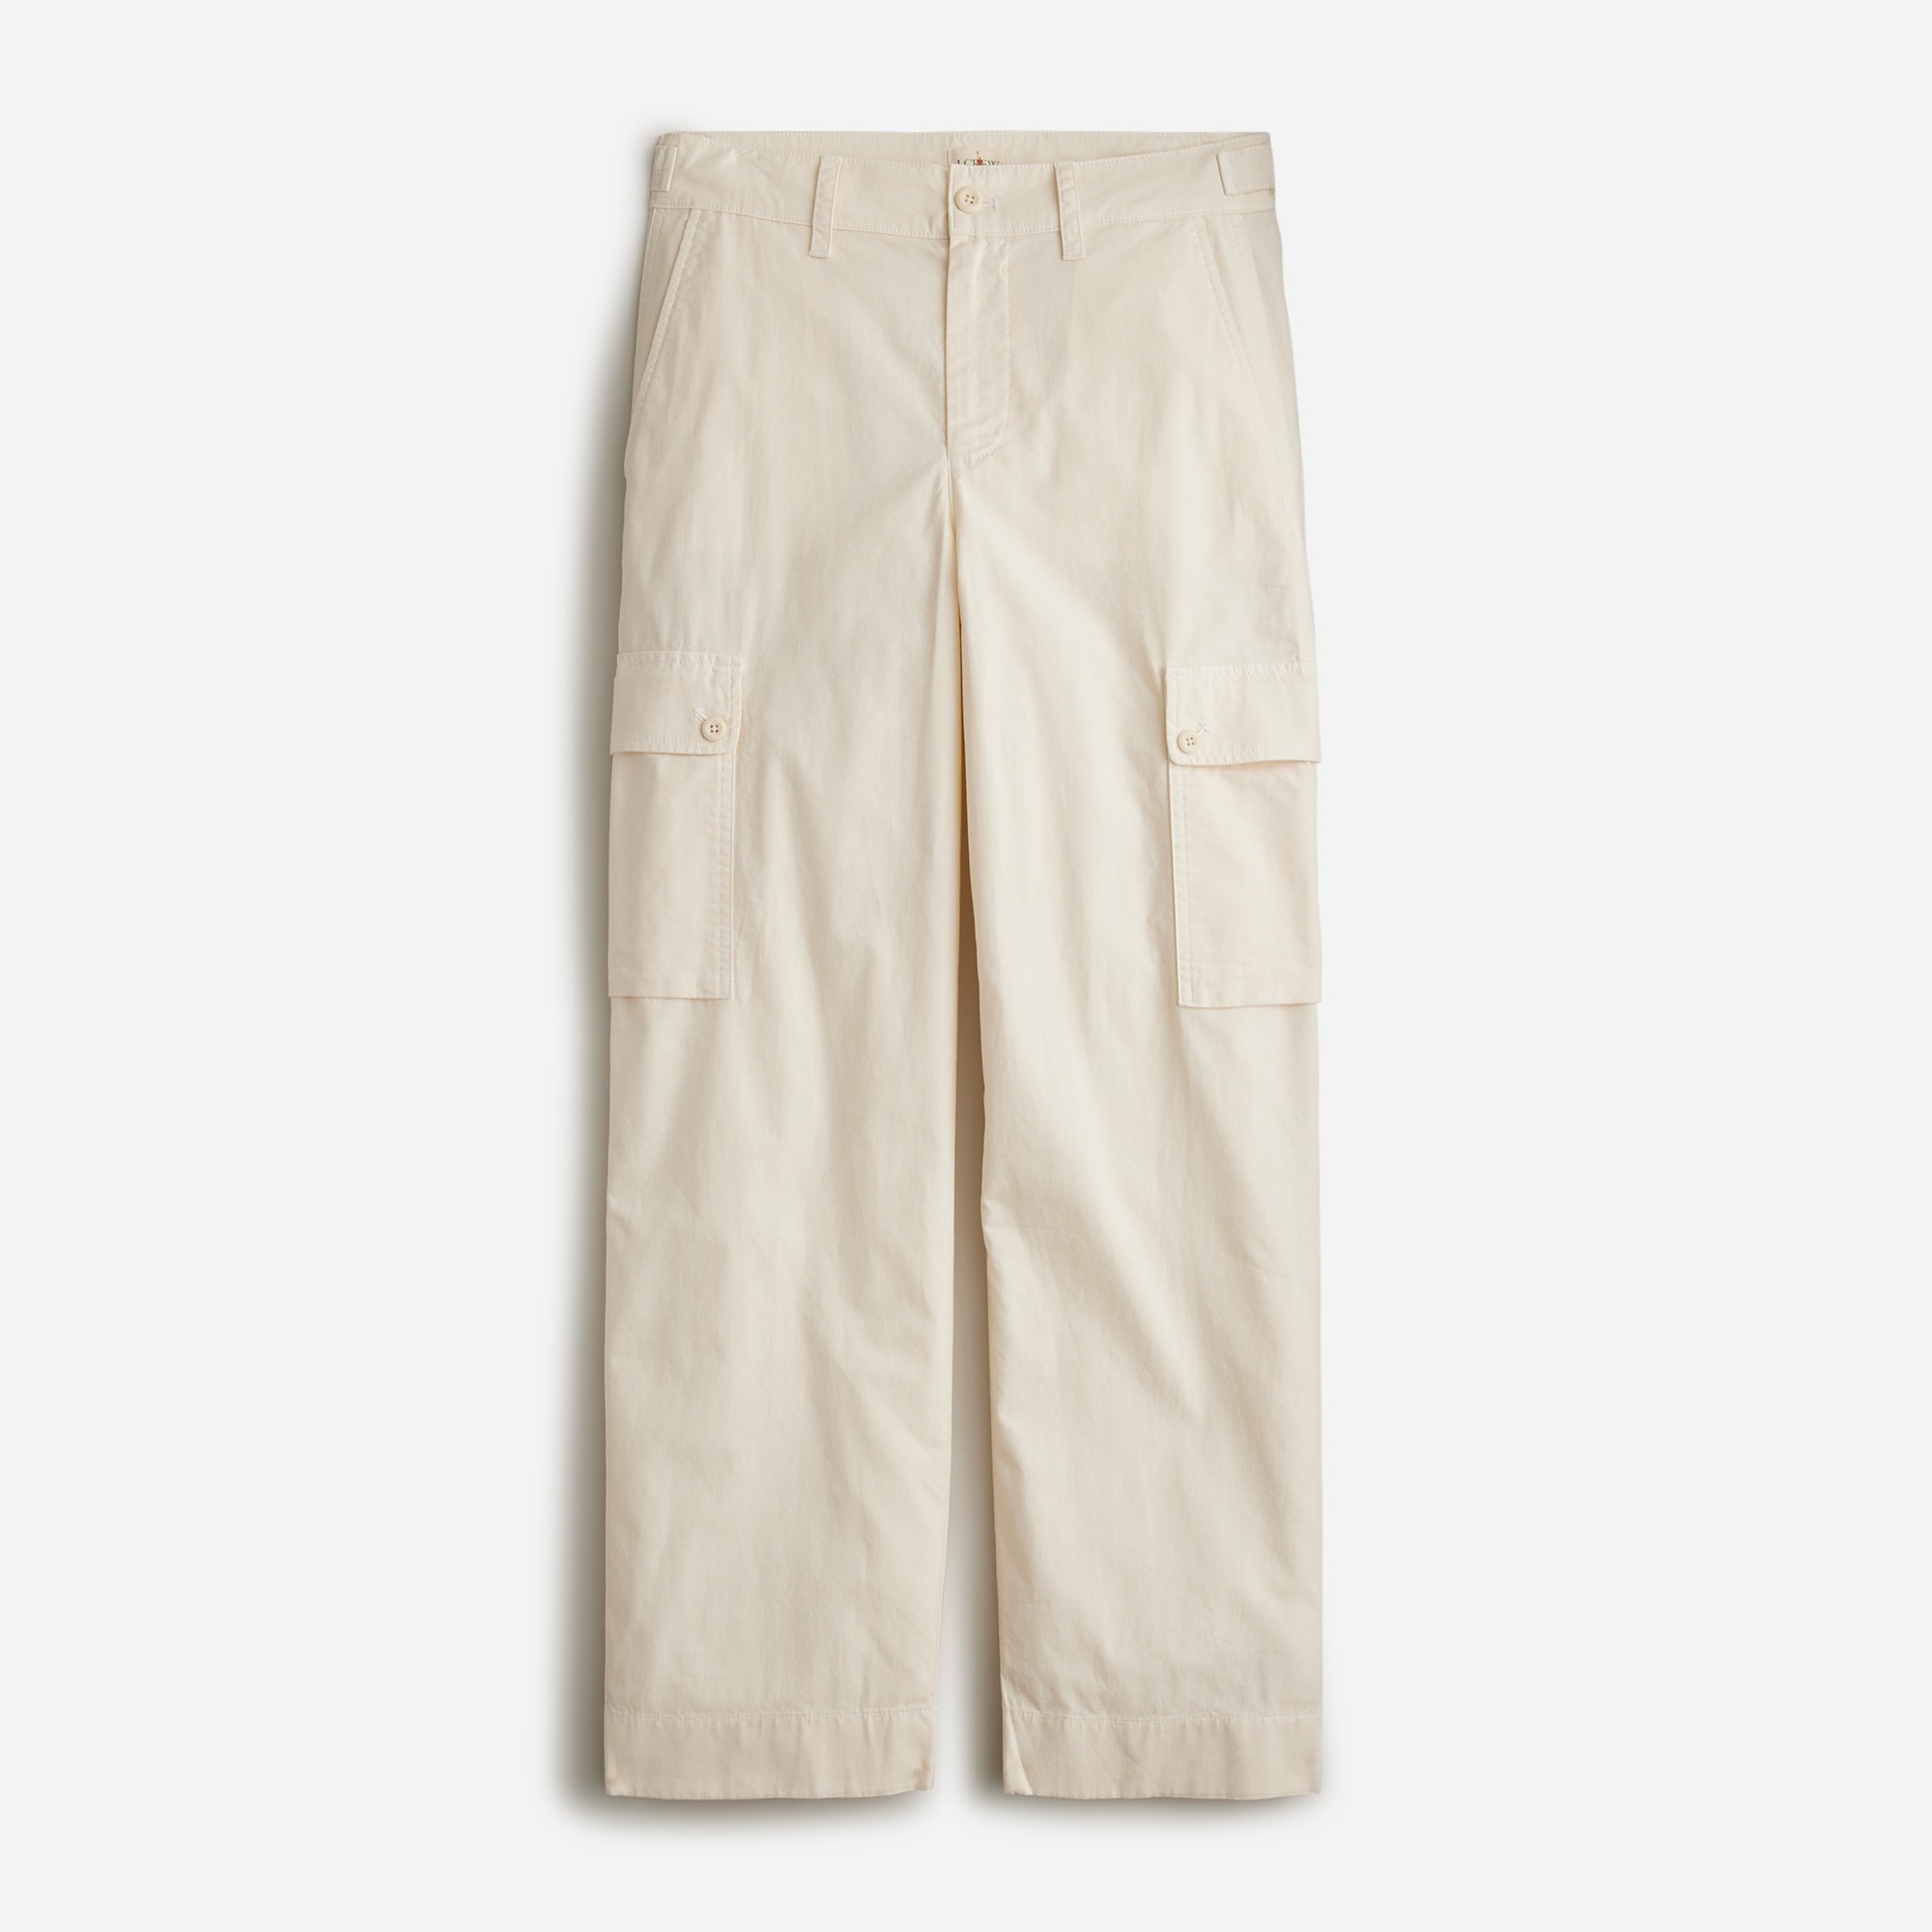 Jcrew Cargo pant in ripstop cotton